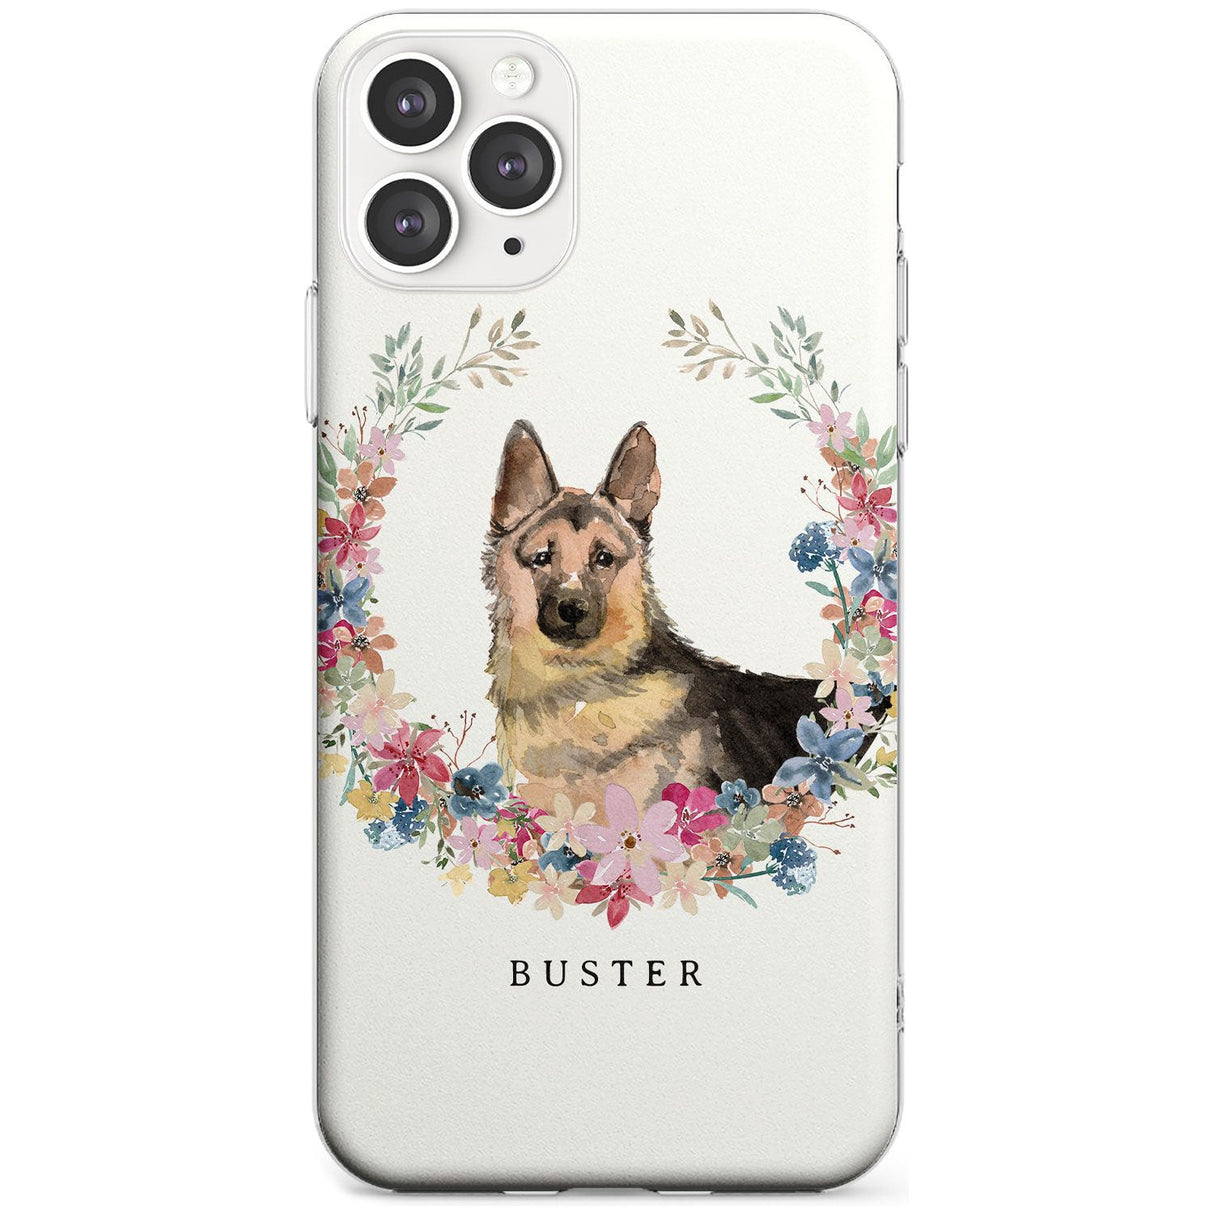 German Shepherd - Watercolour Dog Portrait Slim TPU Phone Case for iPhone 11 Pro Max